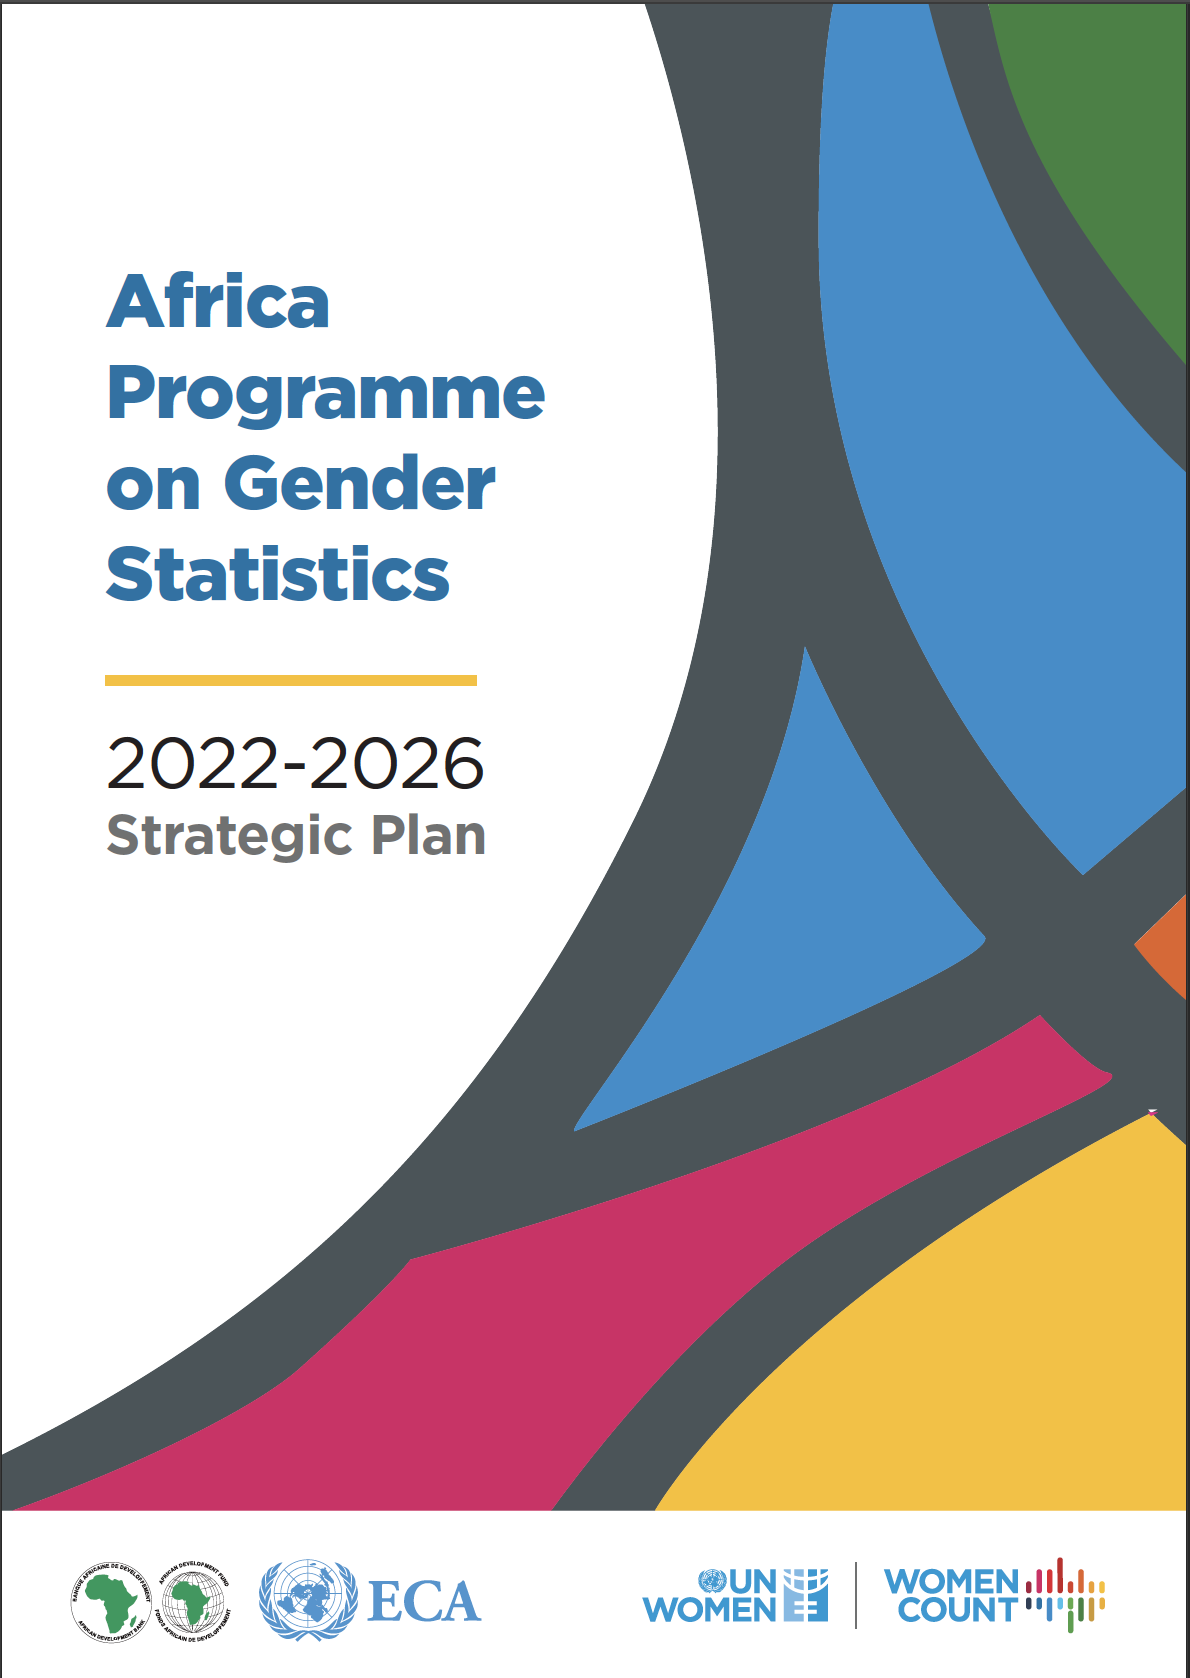 Africa Programme on Gender Statistics Phase III Strategic Plan